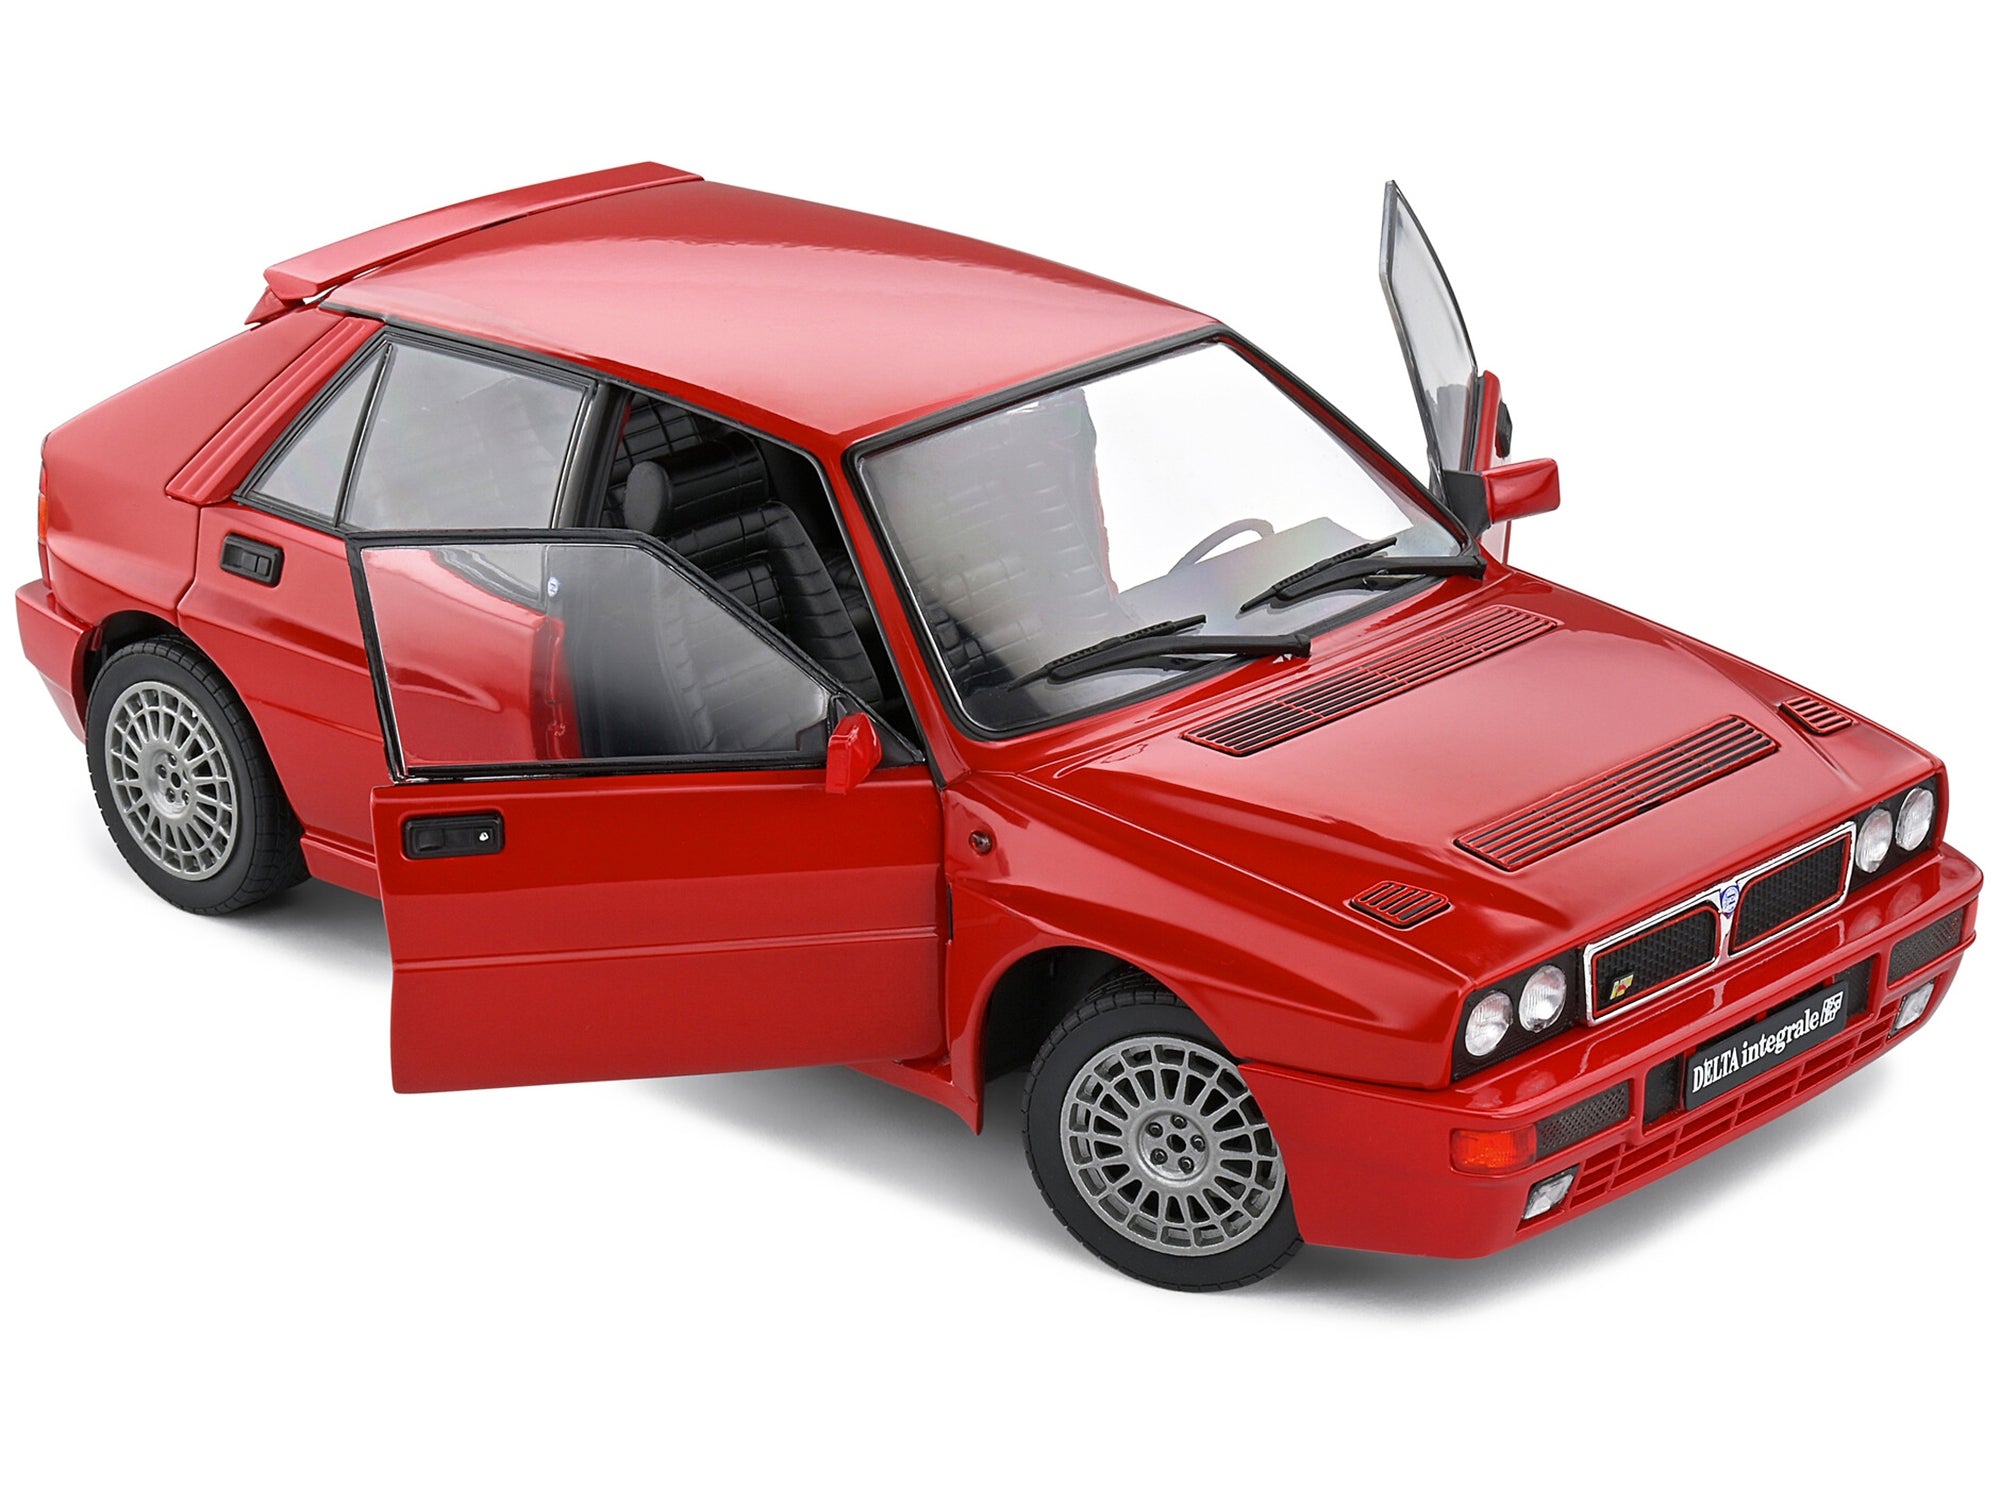 1991 Lancia Delta HF Integrale Rosso Corsa Red 1/18 Diecast Model Car by Solido Solido